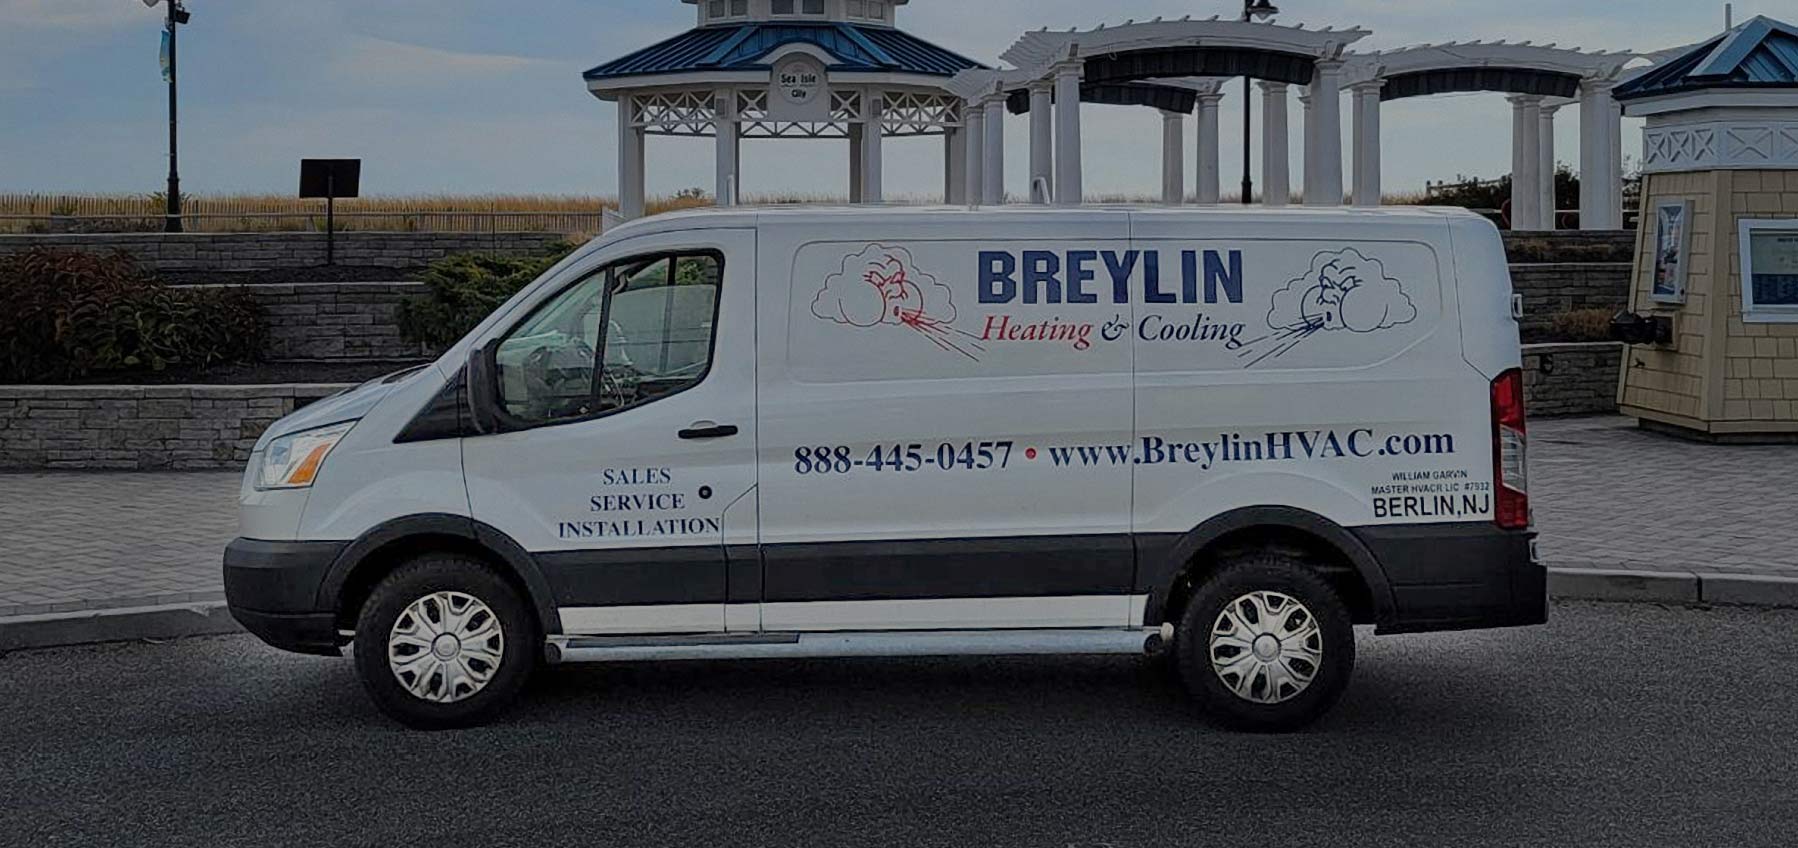 Breylin Heating & Cooling | Atlantic County NJ Heater Air Conditioner HVAC Service